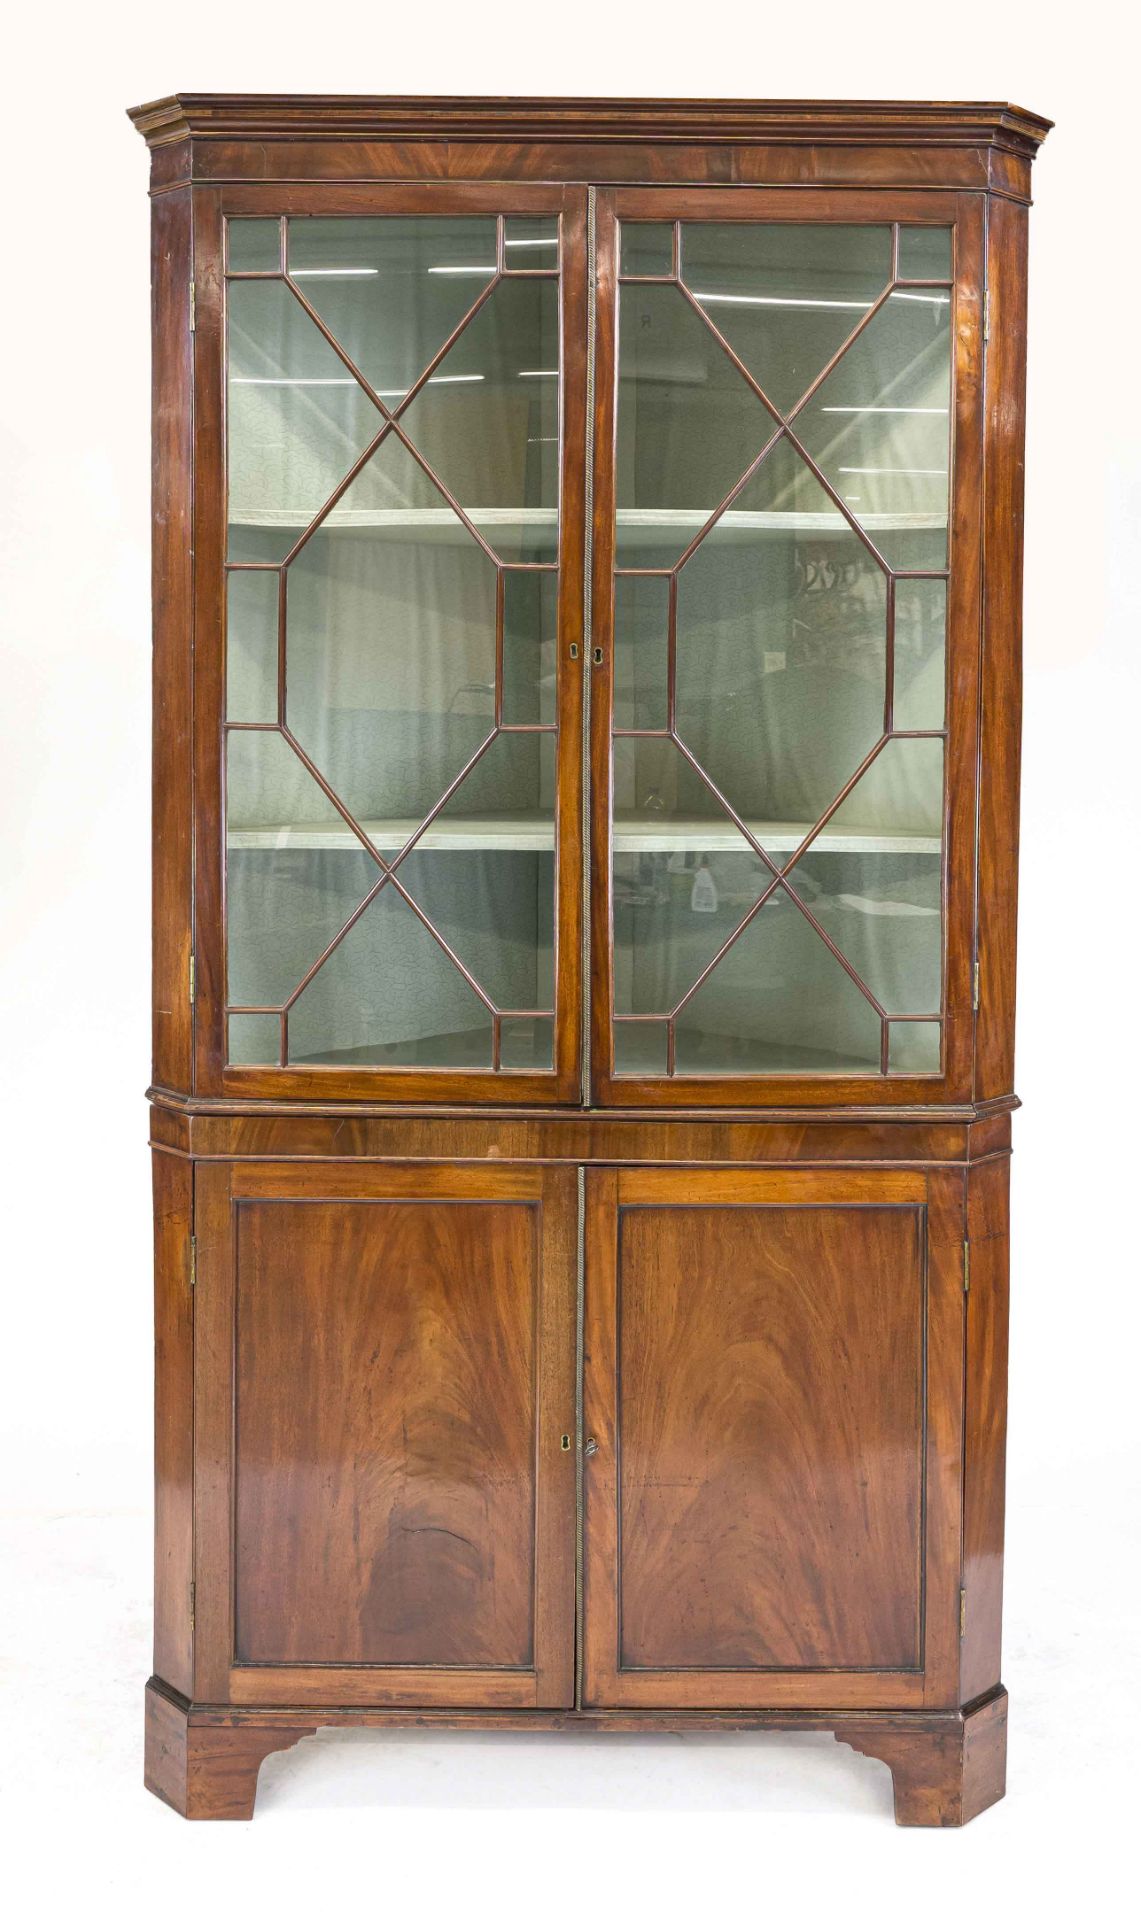 Glass top corner cabinet, England 19th century, mahogany, glazed upper section on 2-door lower